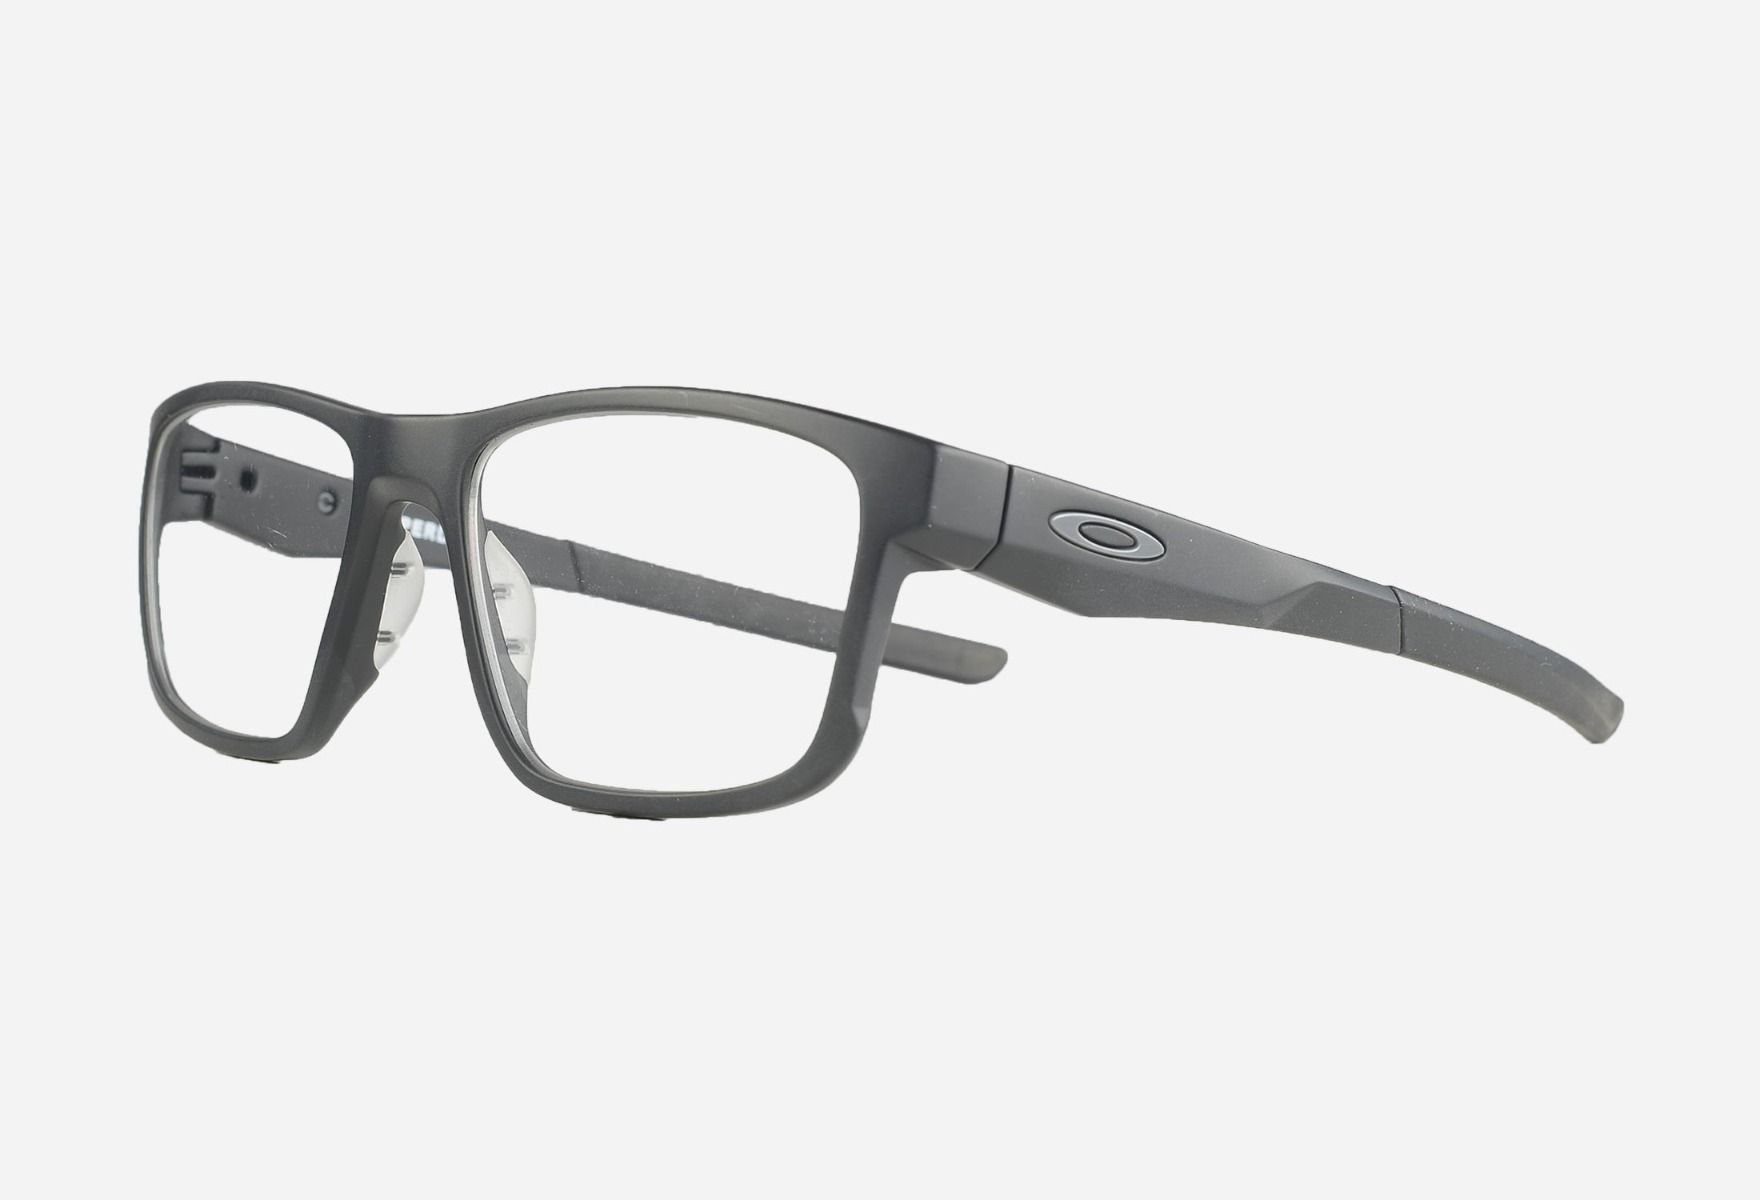 Oakley briller - Hyperlink ox8078 01 - Svart, Large Hel ramme i Plast - Rektangulære